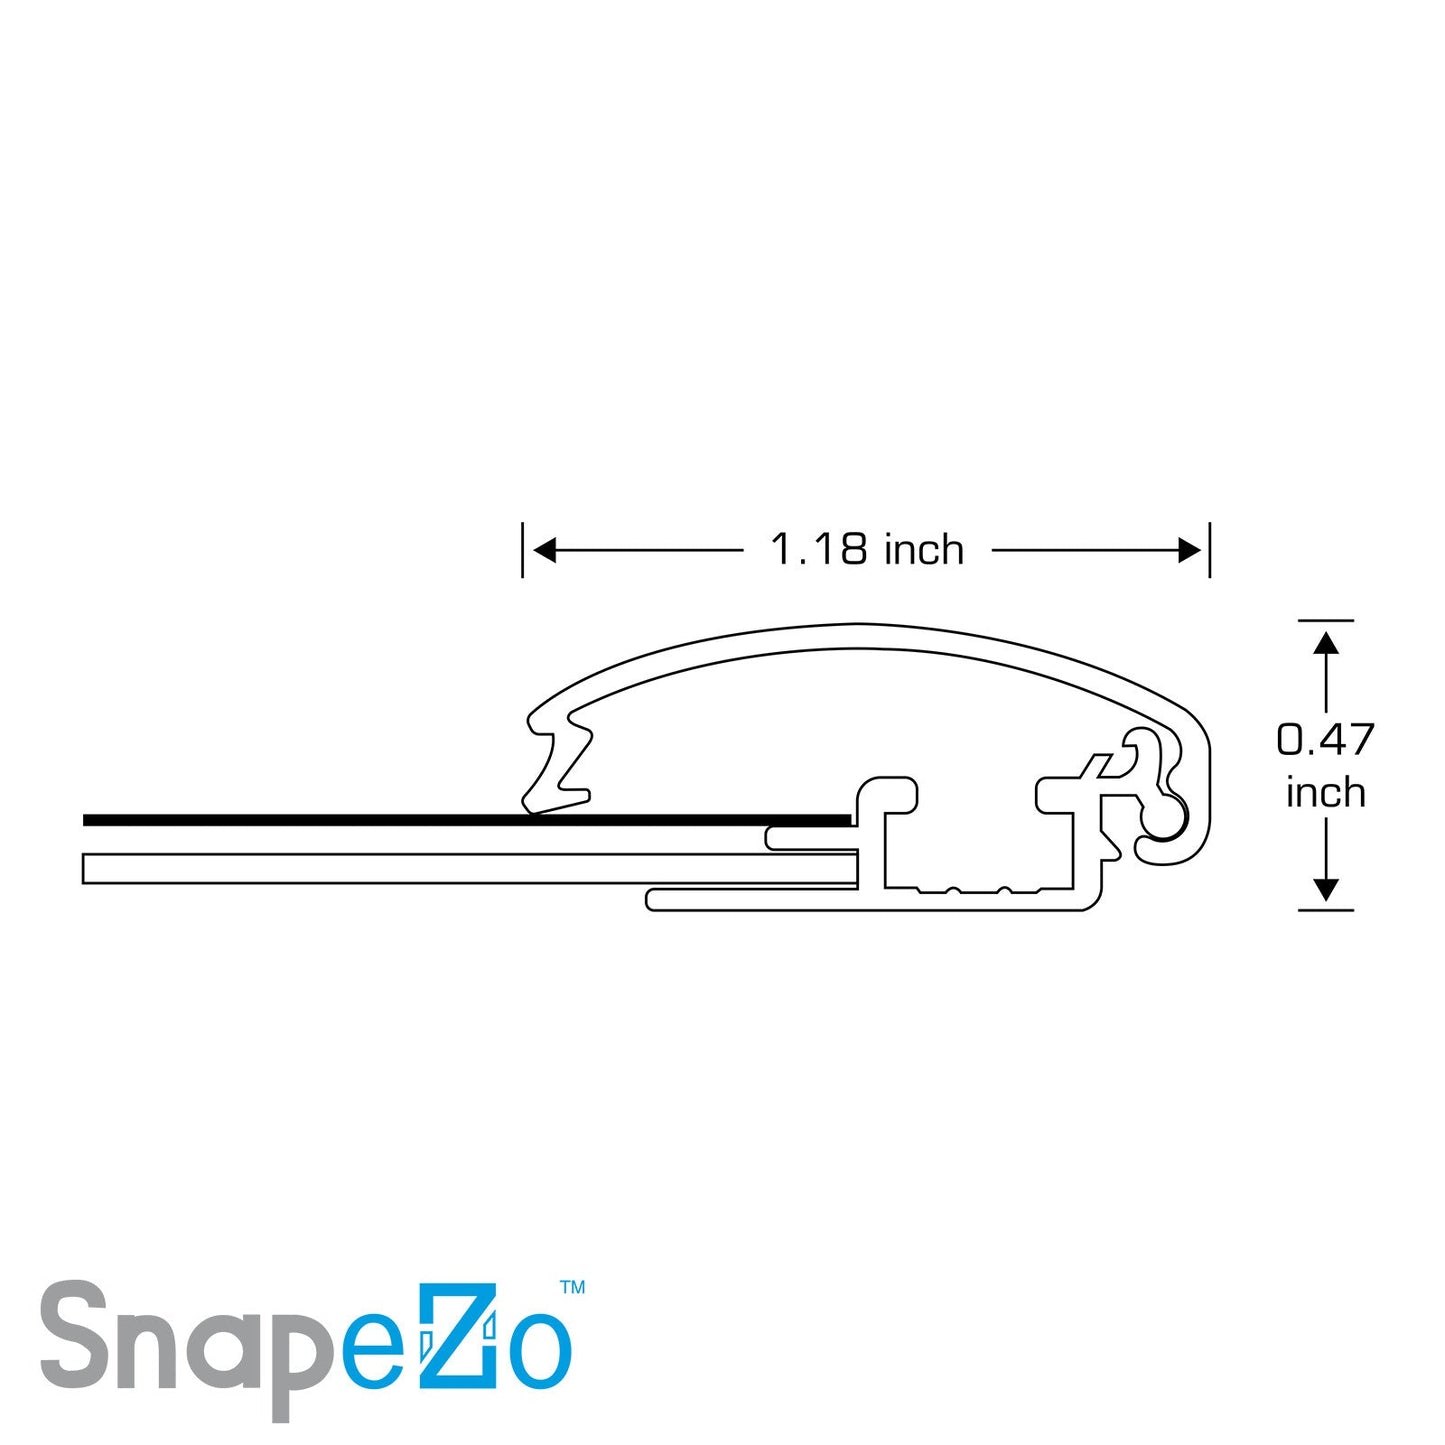 24x32 Silver SnapeZo® Snap Frame - 1.2" Profile